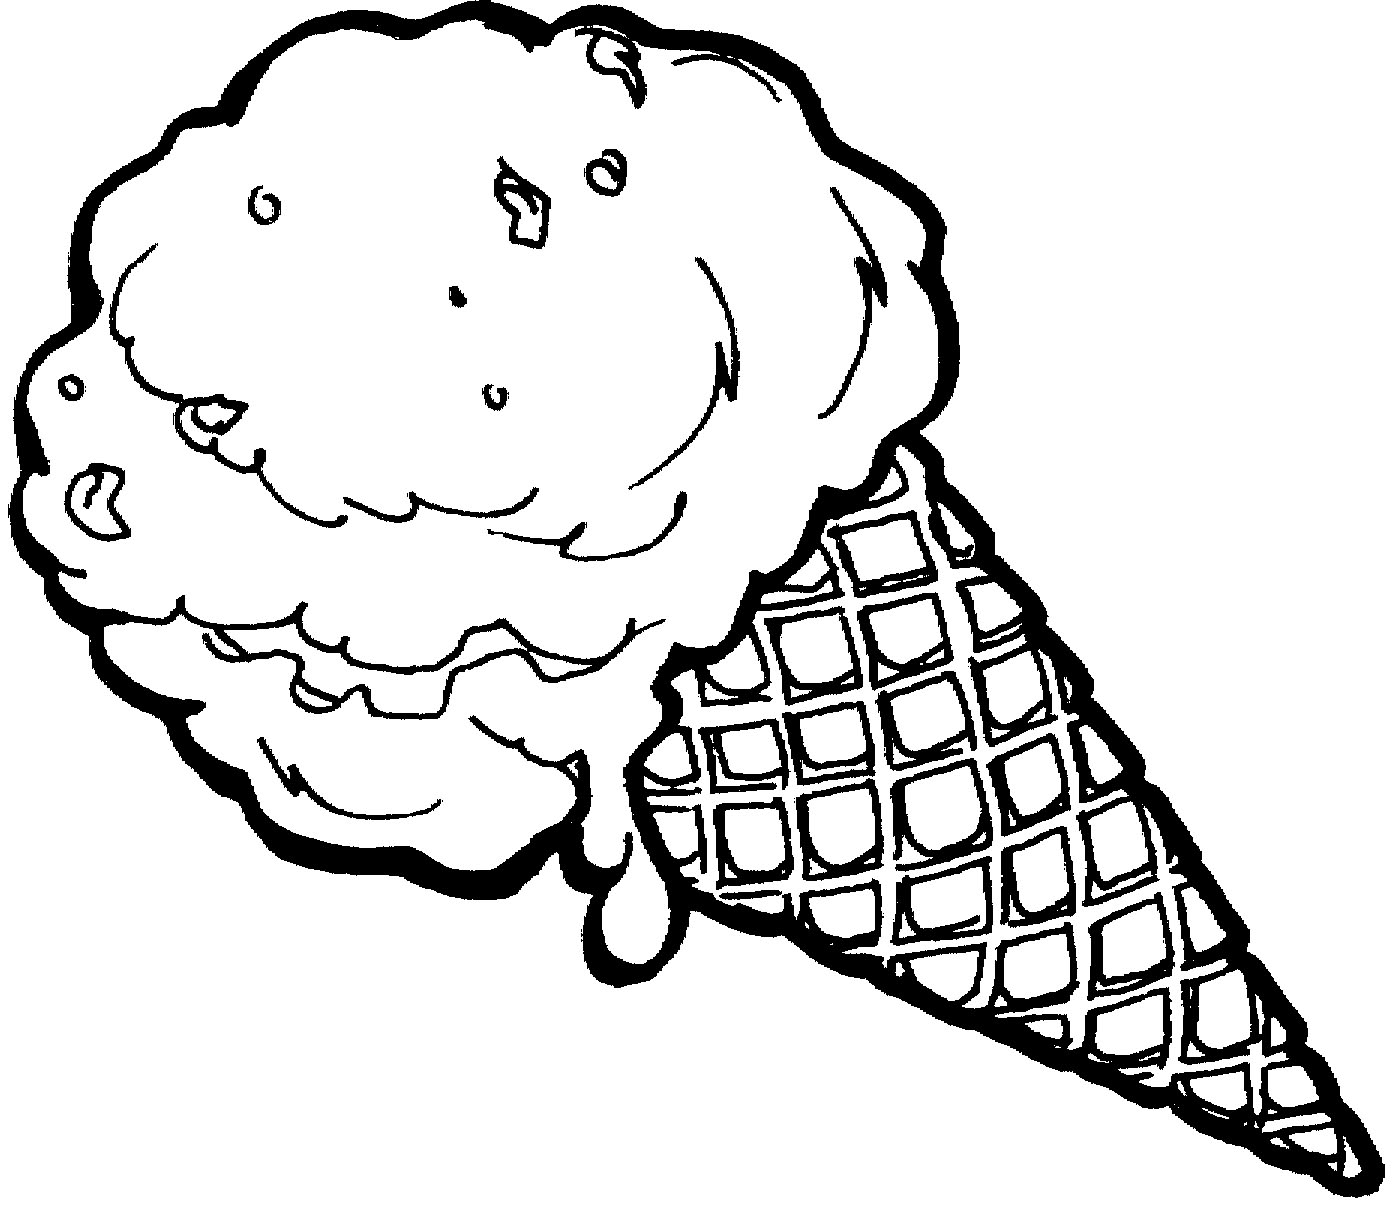 free-ice-cream-cone-coloring-page-download-free-ice-cream-cone